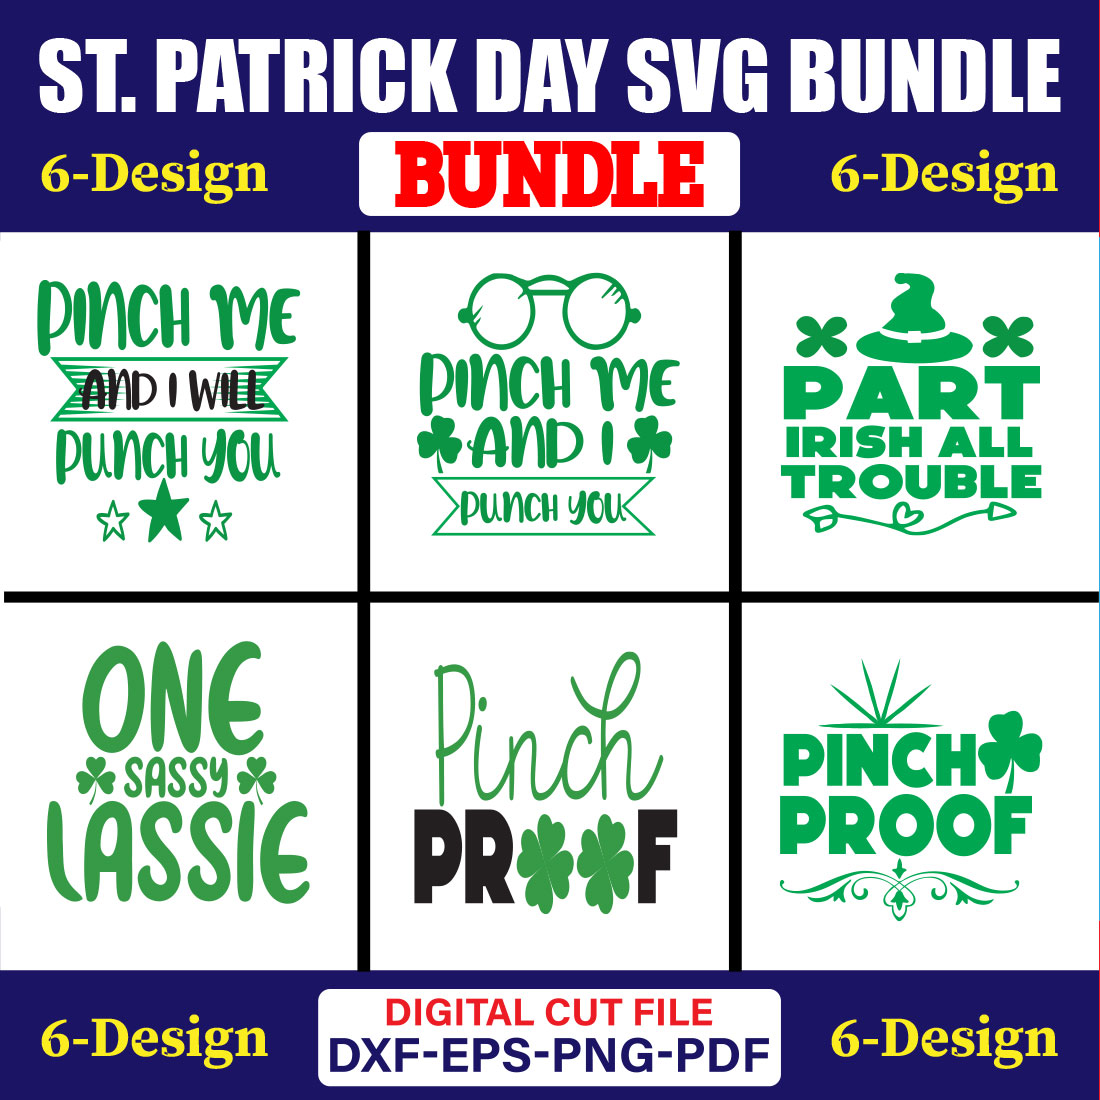 St Patrick Day SVG T-shirt Design Bundle Vol-29 cover image.